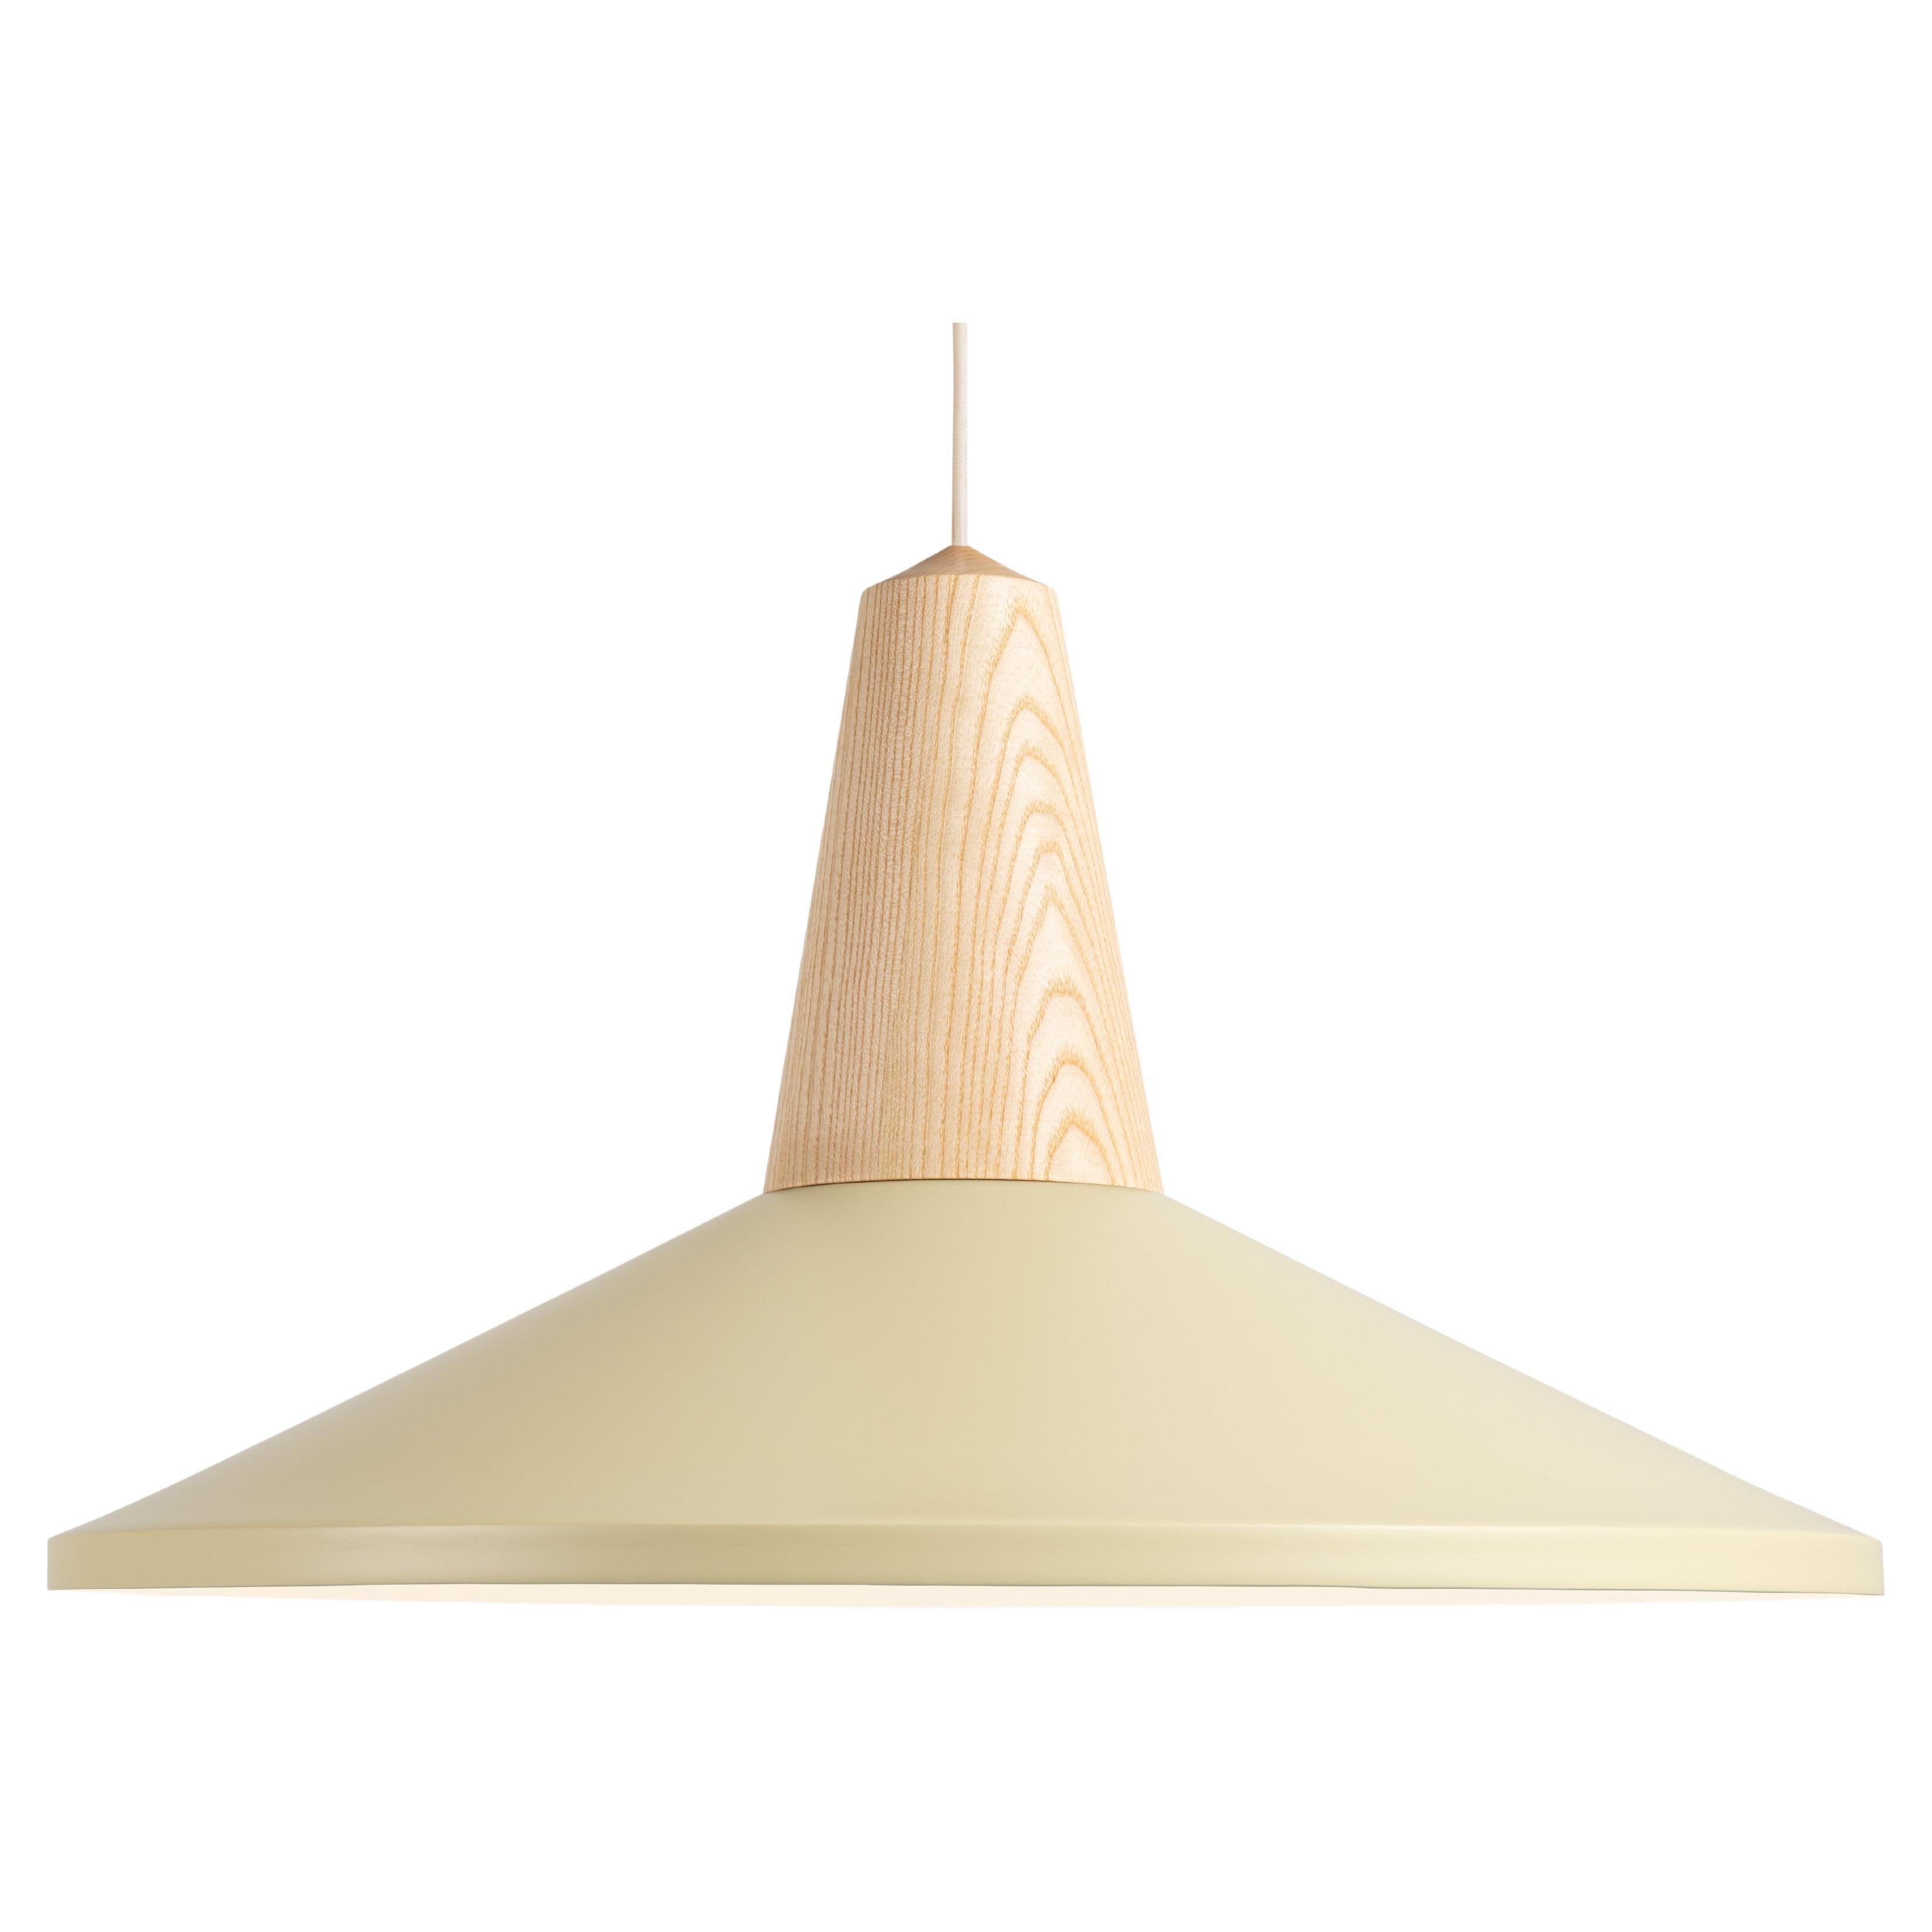 Schneid Studio Eikon Shell Wax, Ash, Pendant Lamp For Sale